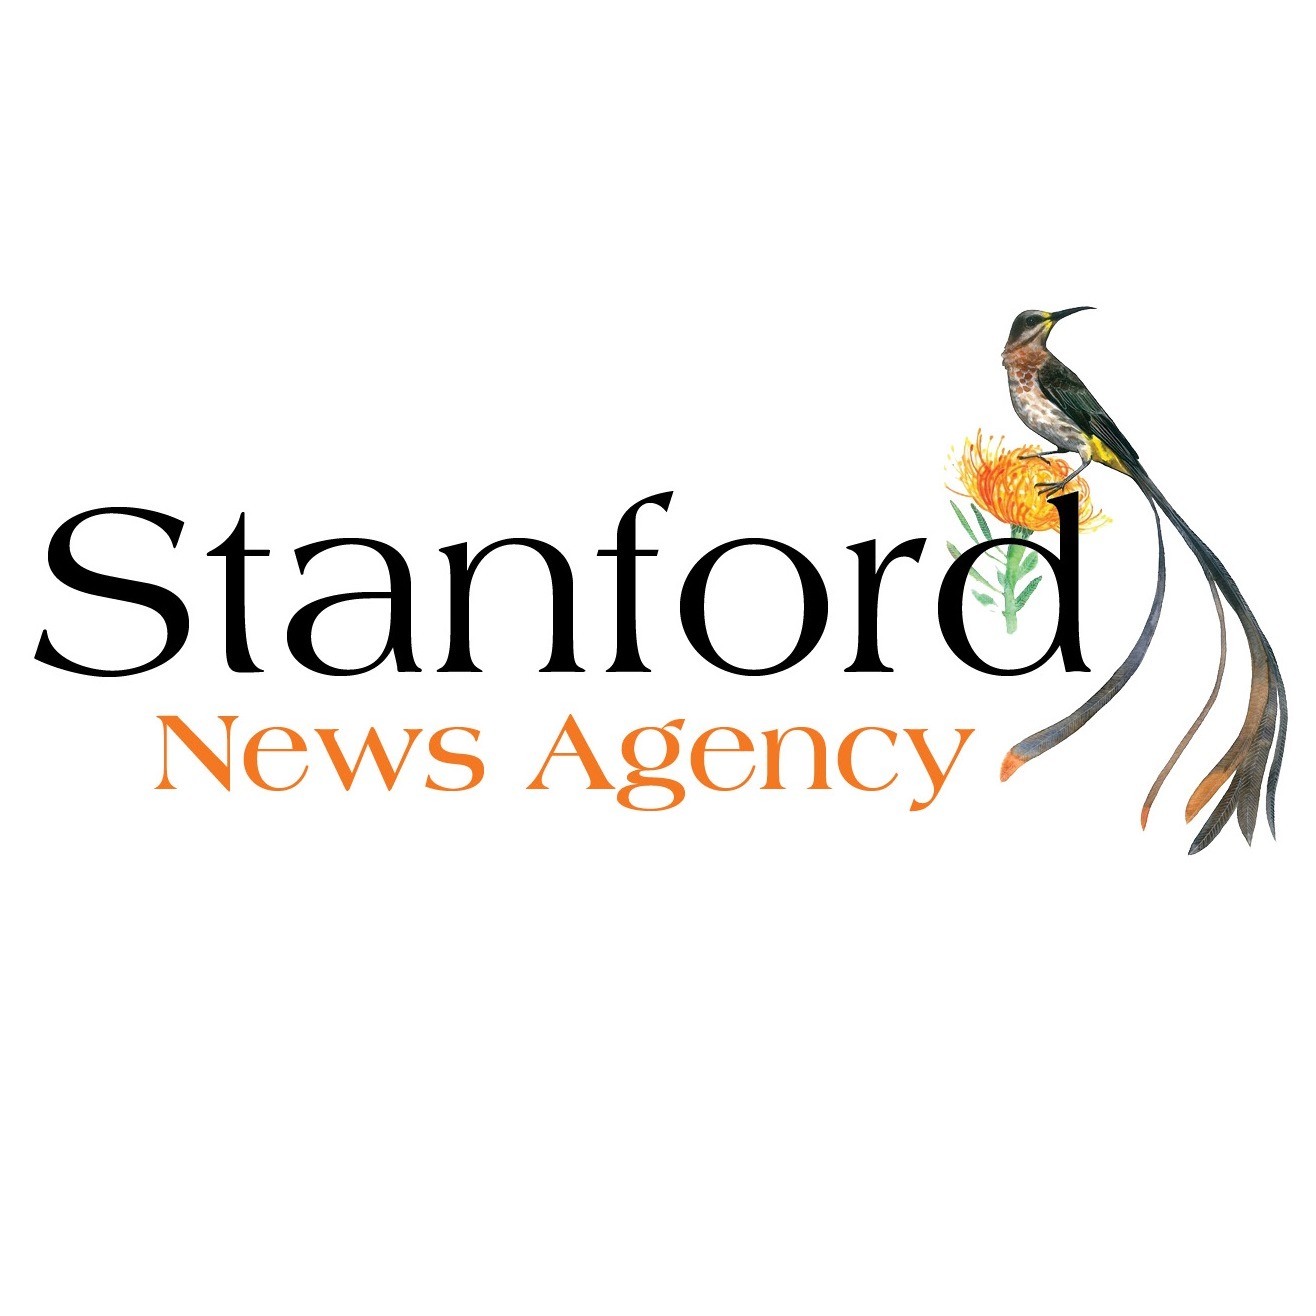 Stanford News Agency